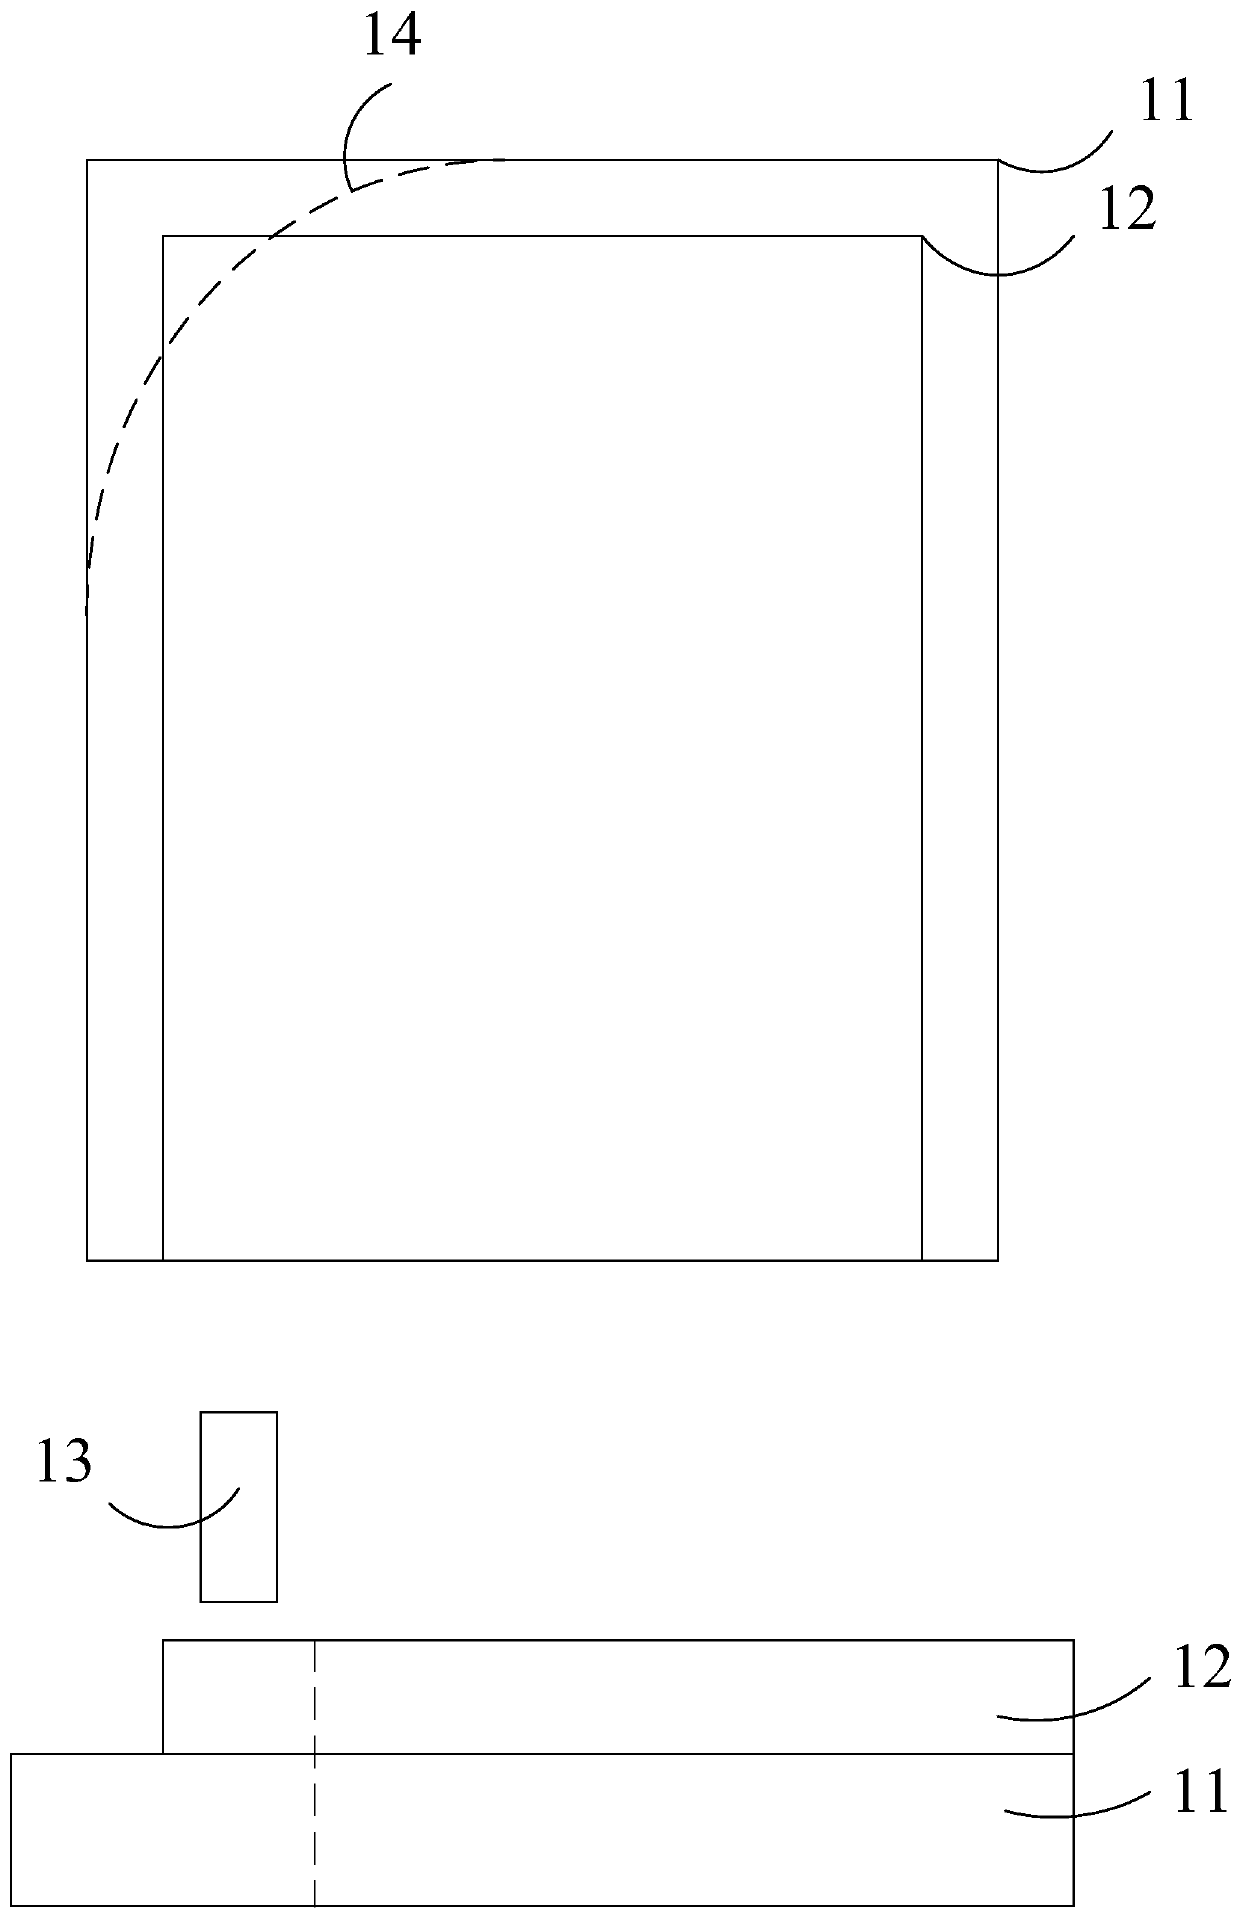 Display panel splitting device